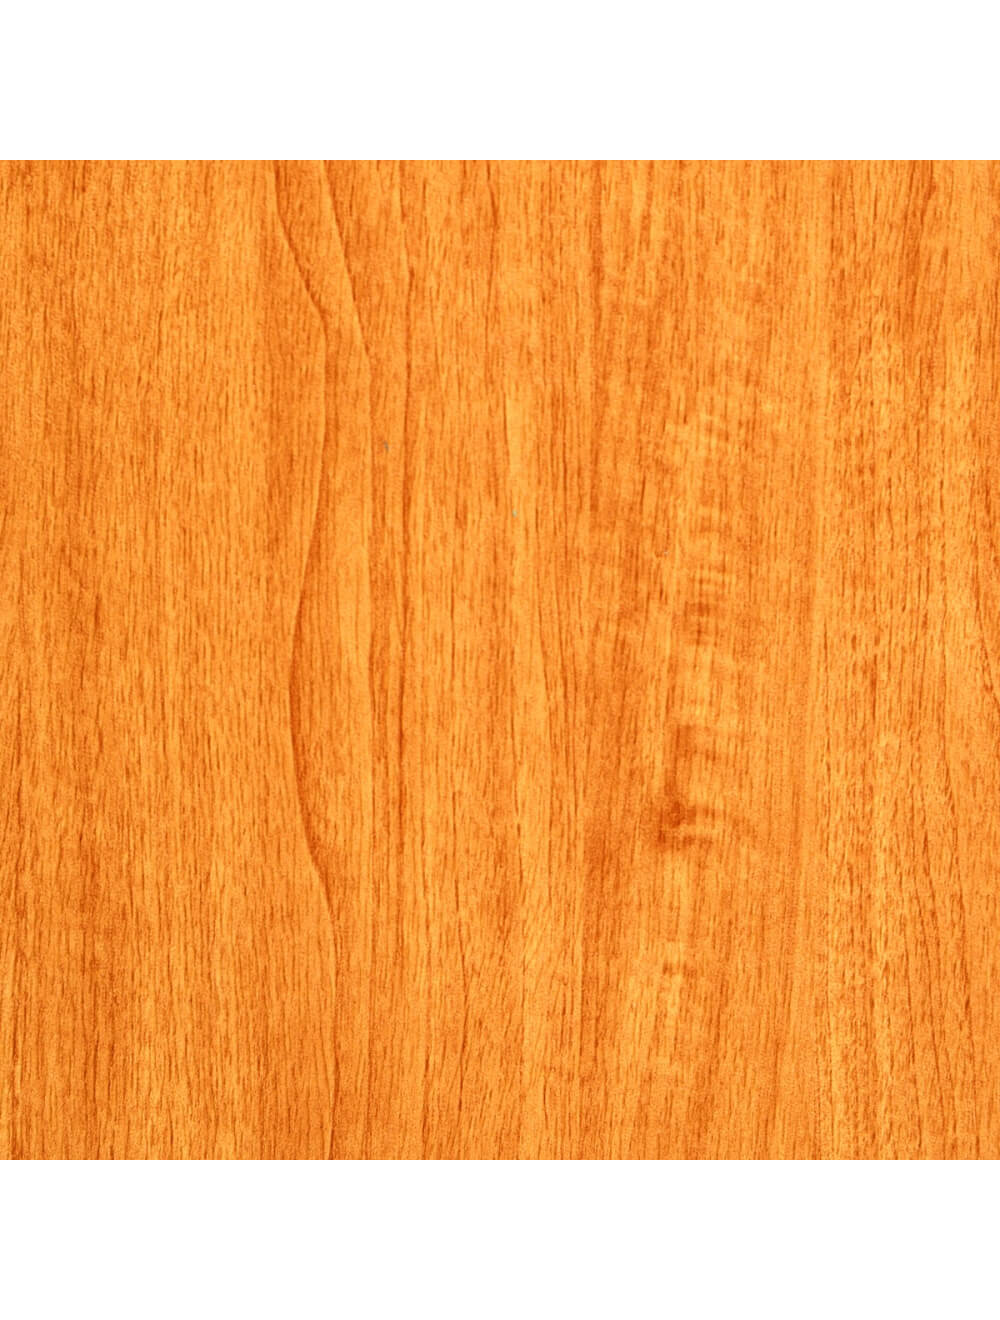 Образец материала Washington Yellow Wood Grain (E935)